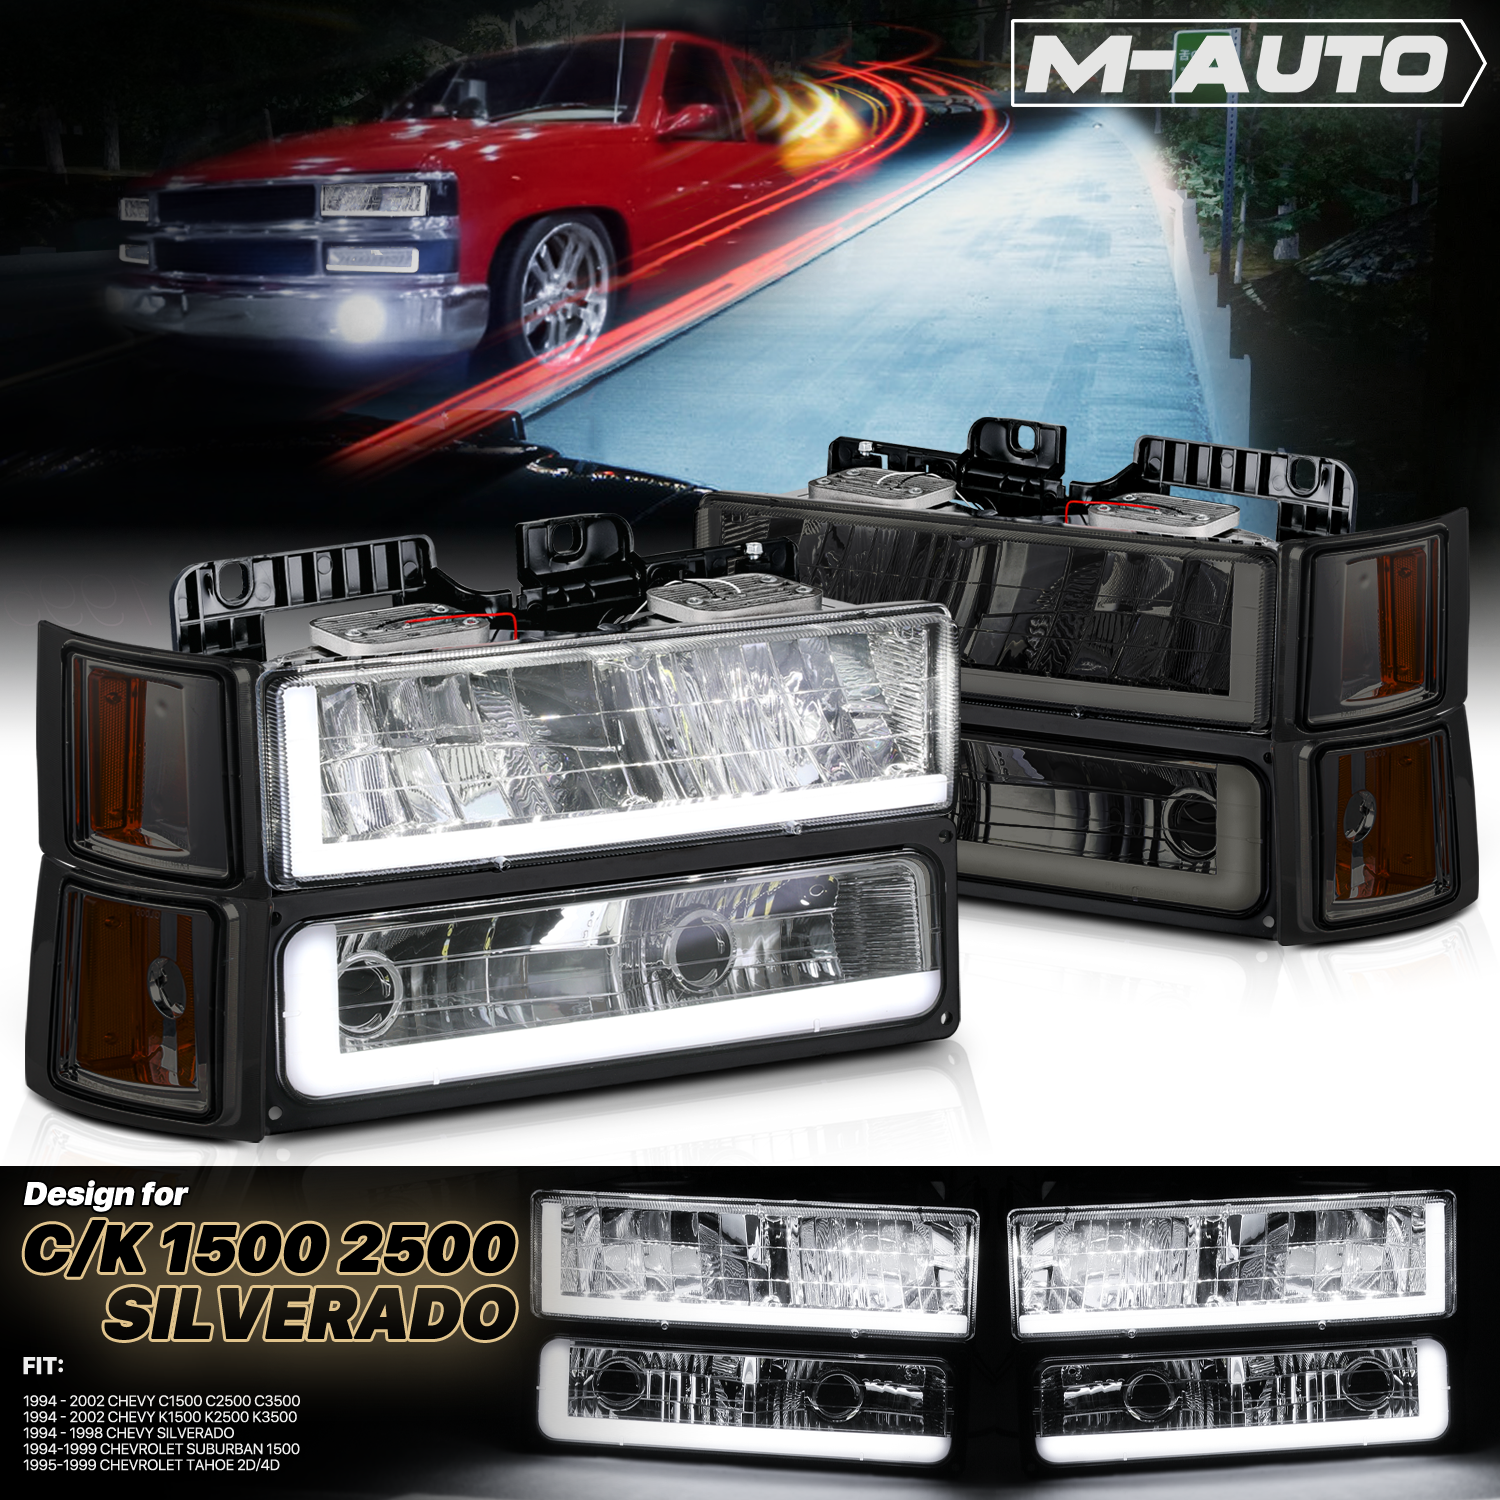 8pcs Headlights w/LED DRL Strip (Smoked)<br>94-00 Chevy C/K C10 Pickup, Suburban